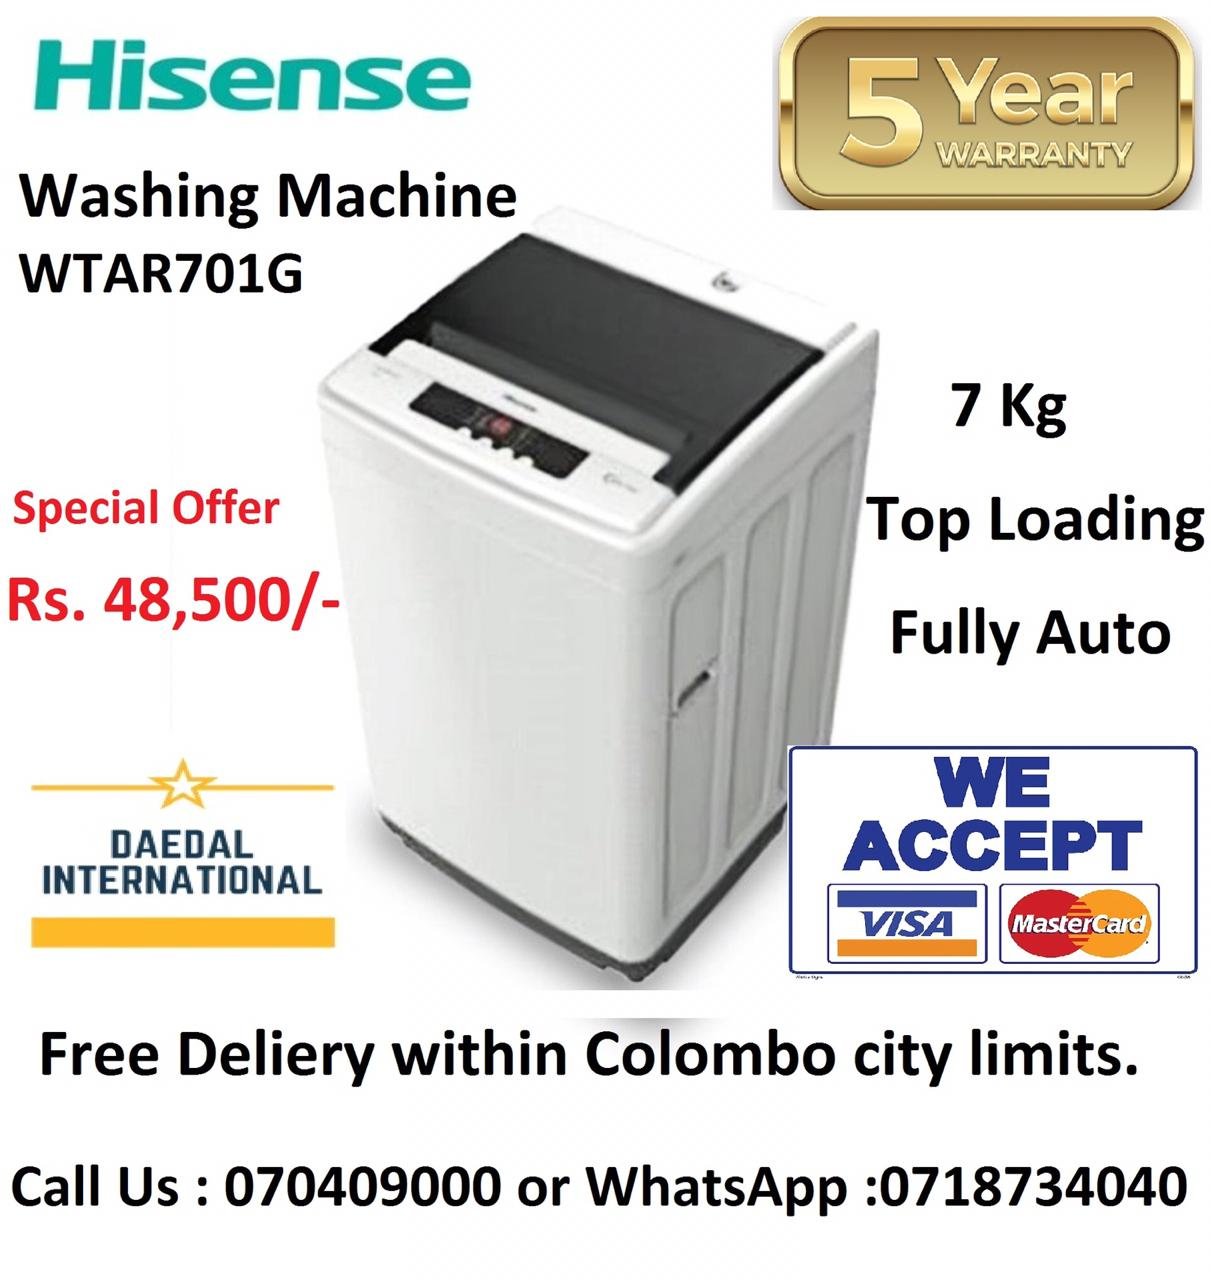 Hisense Topload Washing Machine (7Kg)